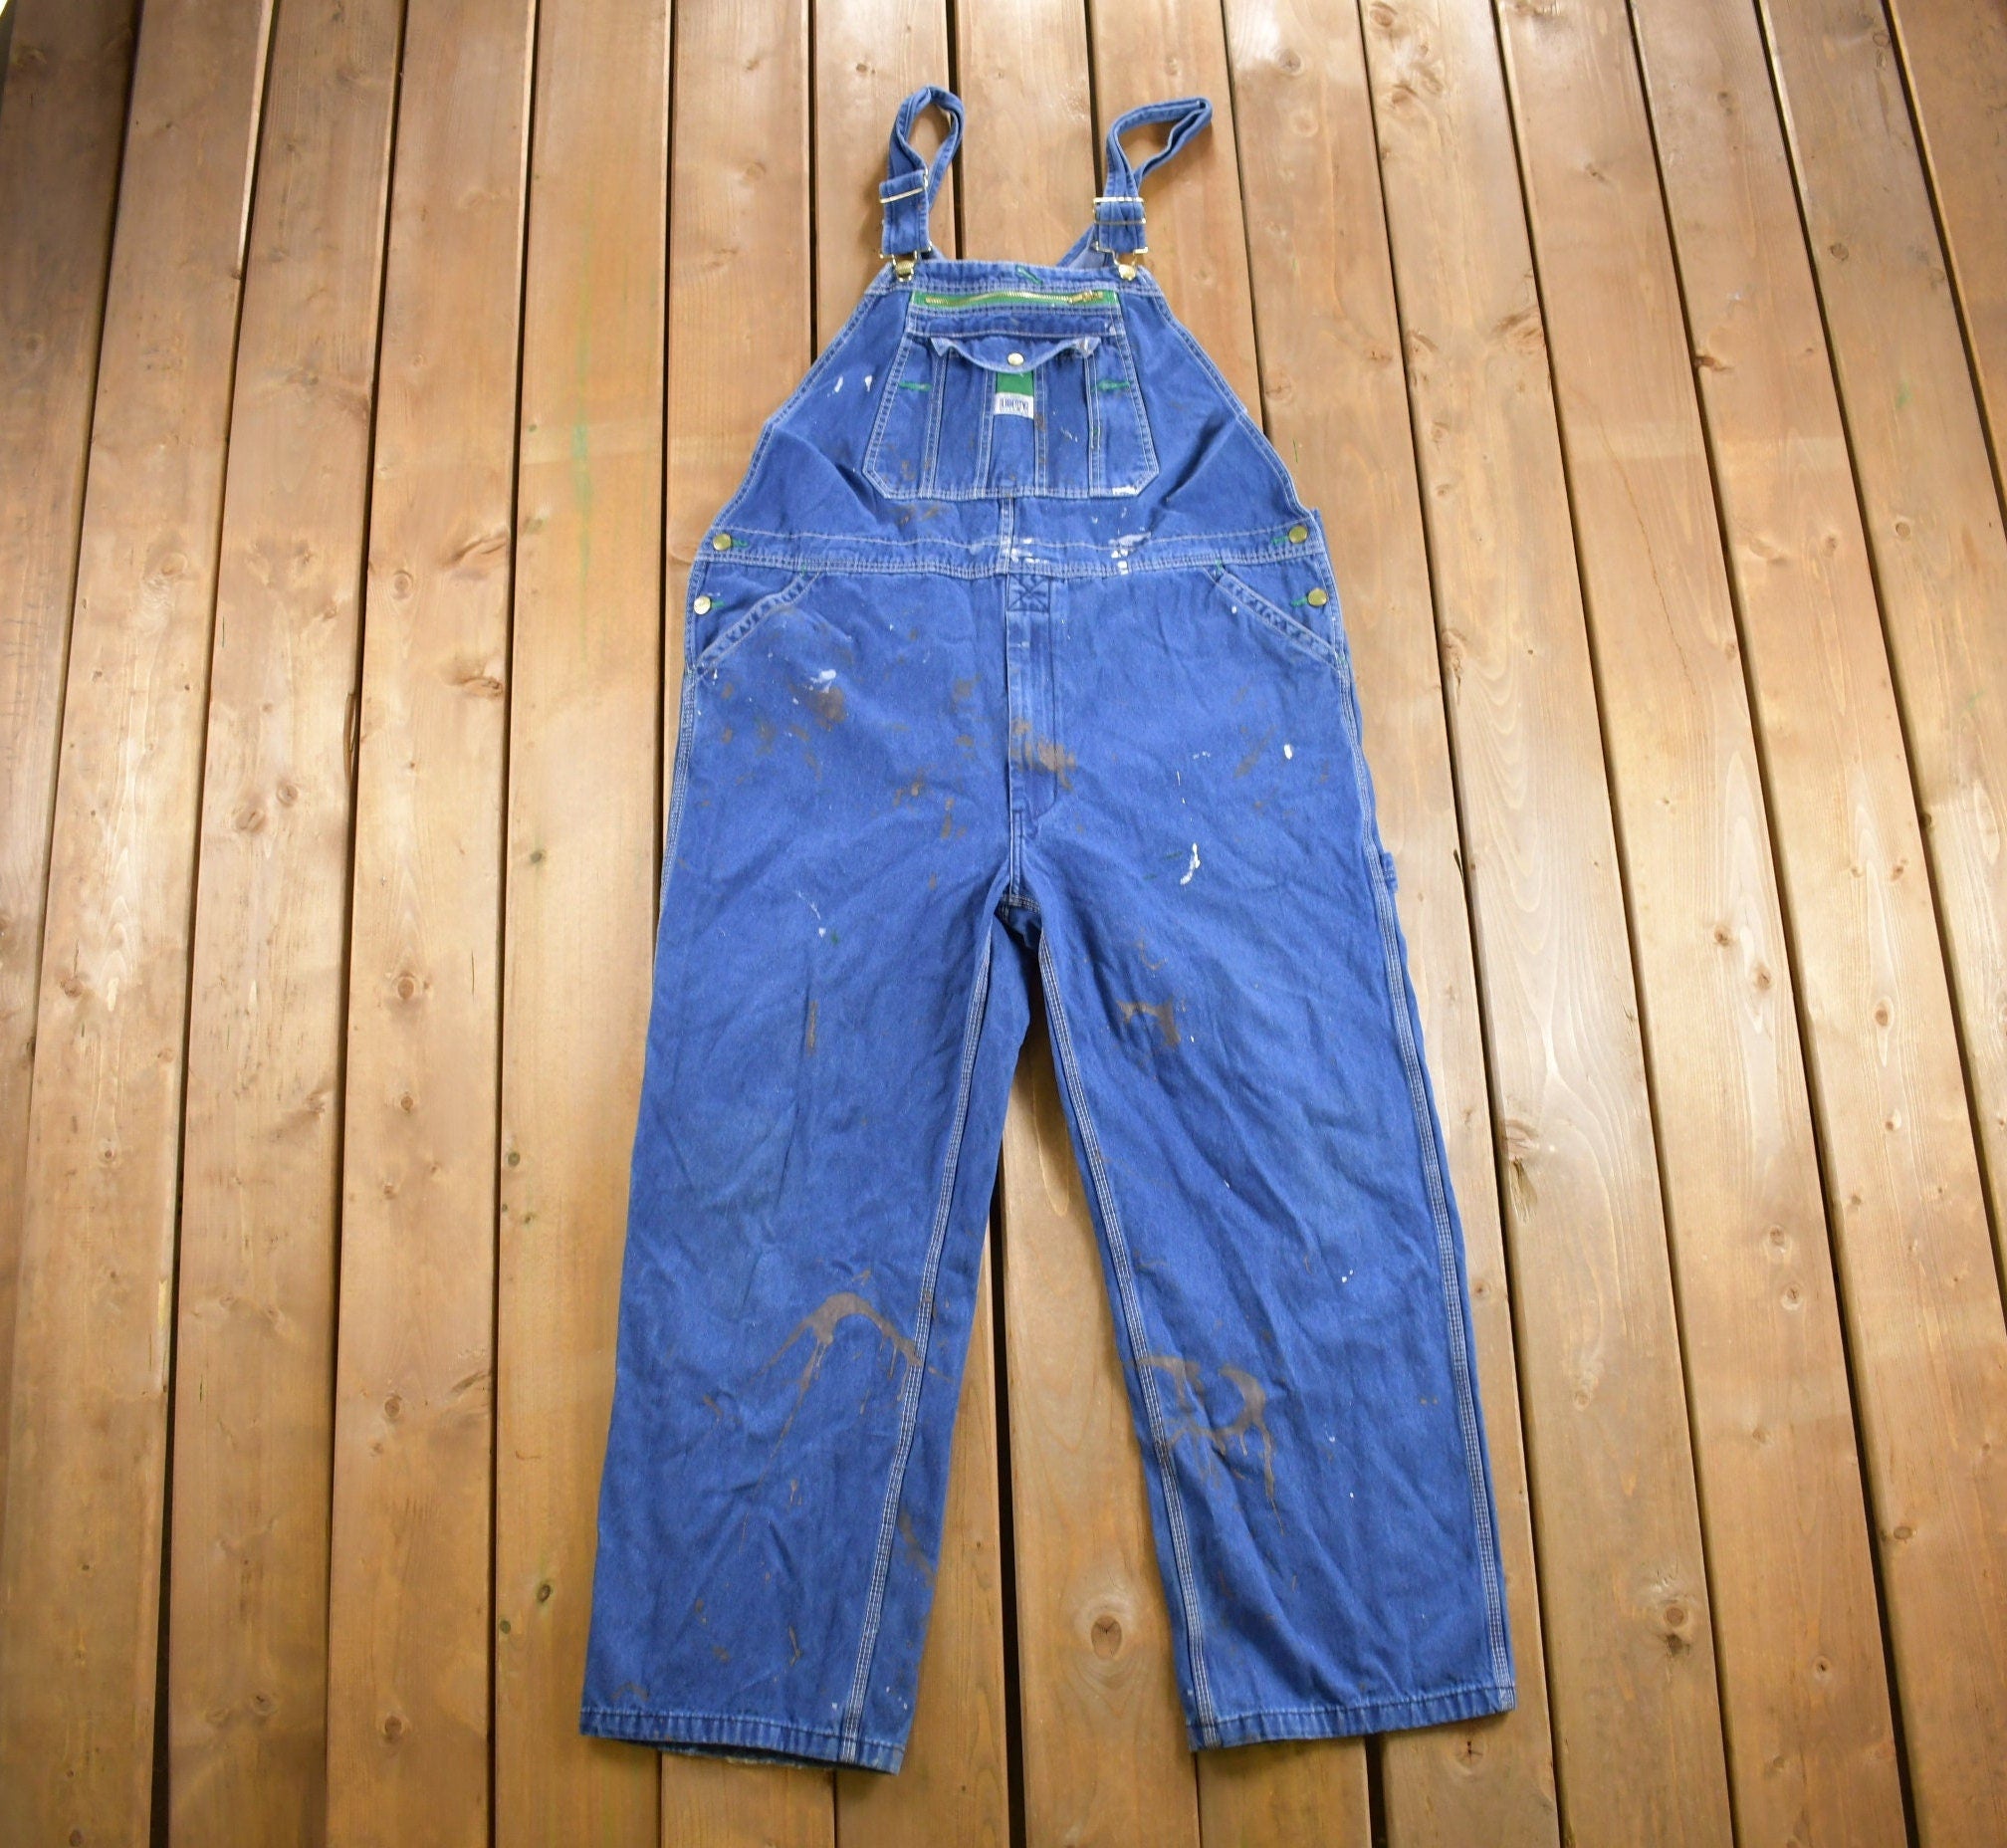 Vintage 1990s Liberty Jeans Denim Overalls Size 40 x 28 / Vintage Overalls  / Streetwear / Vintage Workwear / Distressed